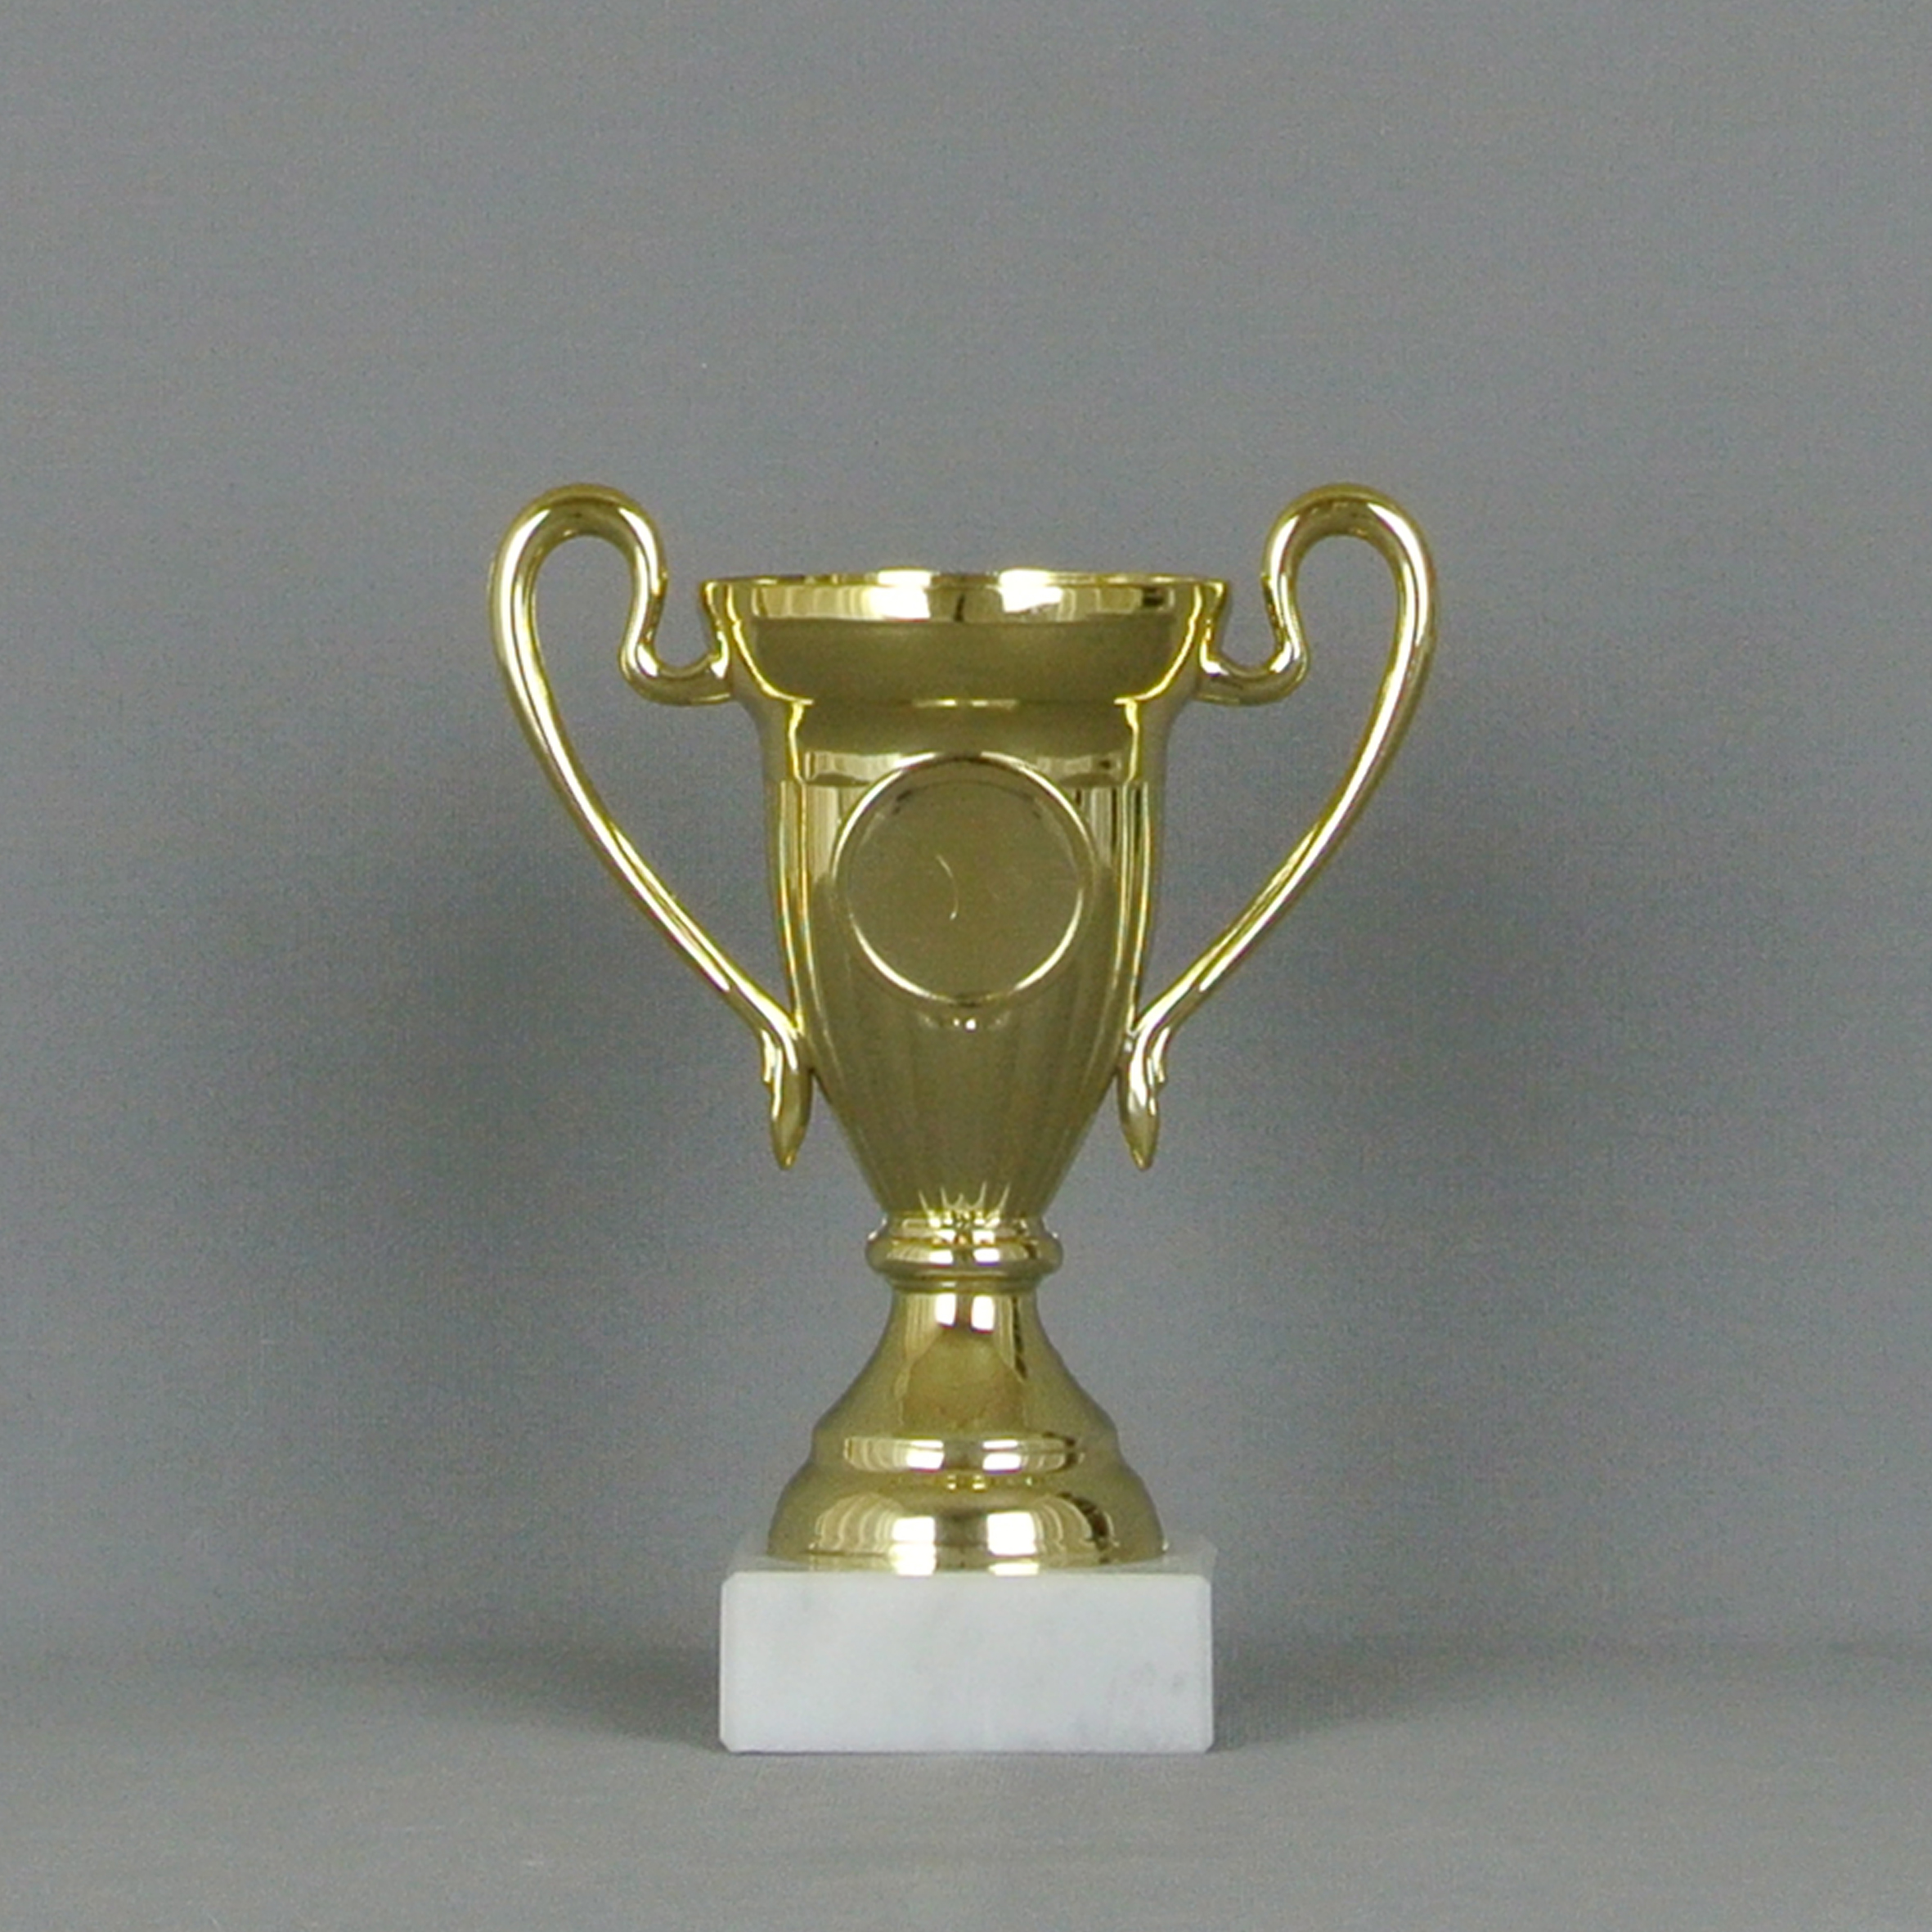 Gravur NEU 2019 Pokal 3er Serie Fußball Pokale ACRYL gold silber bronze incl 